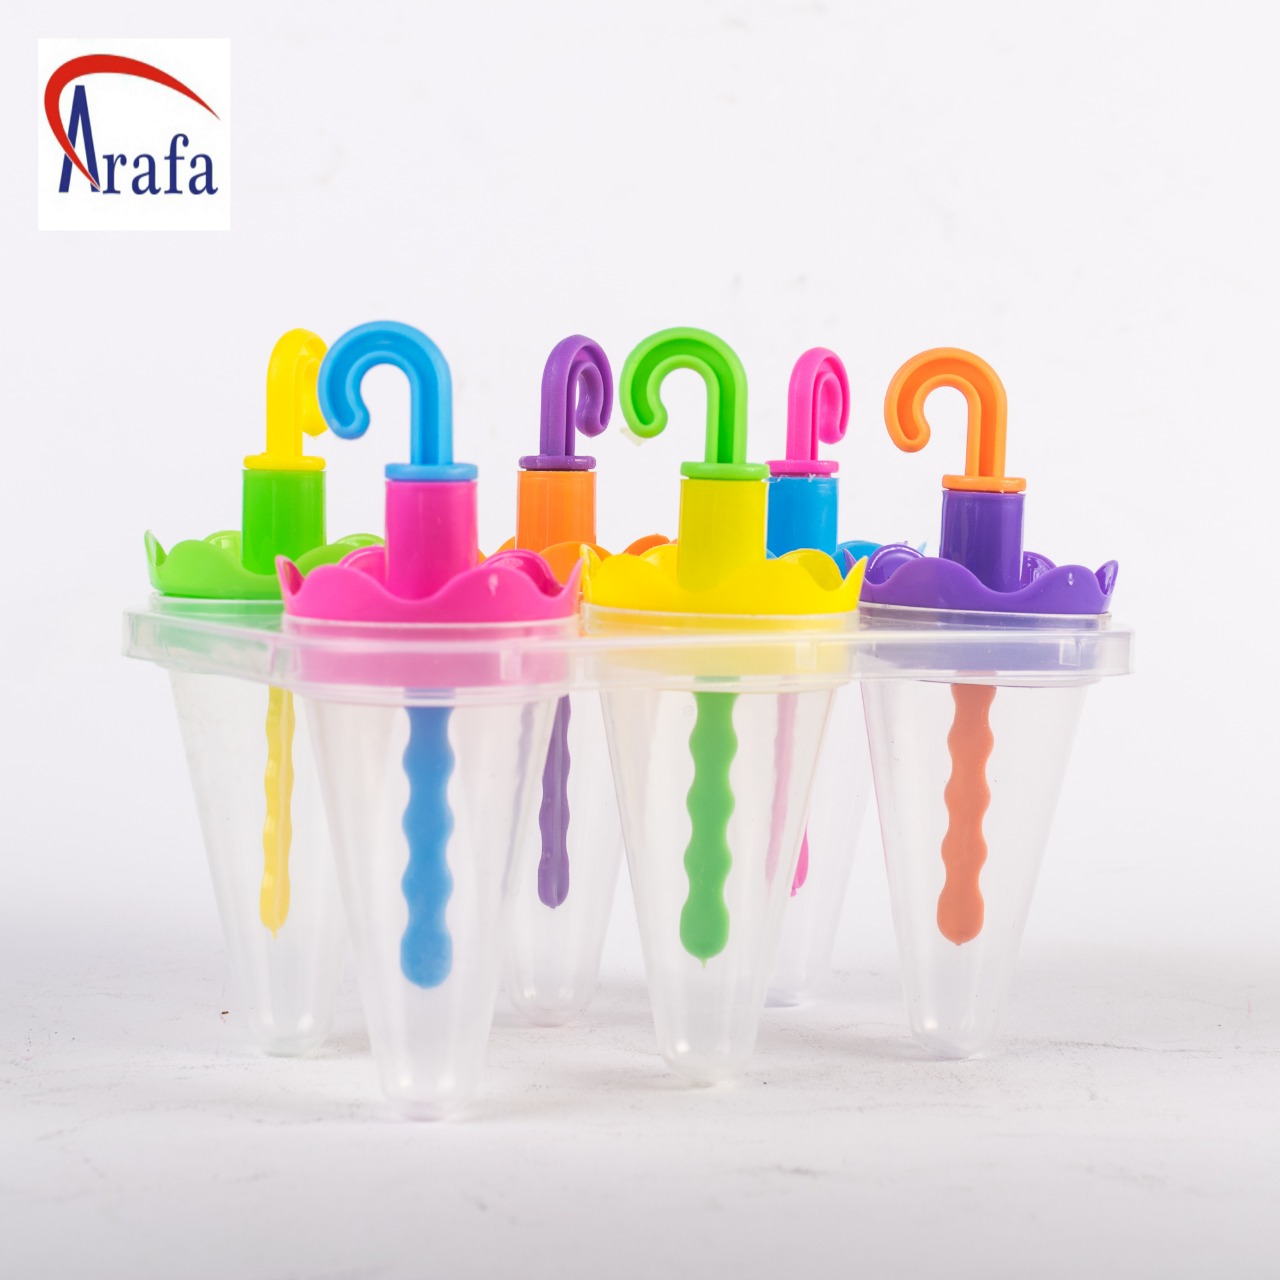 Arafa Company for plastic Manufacturing